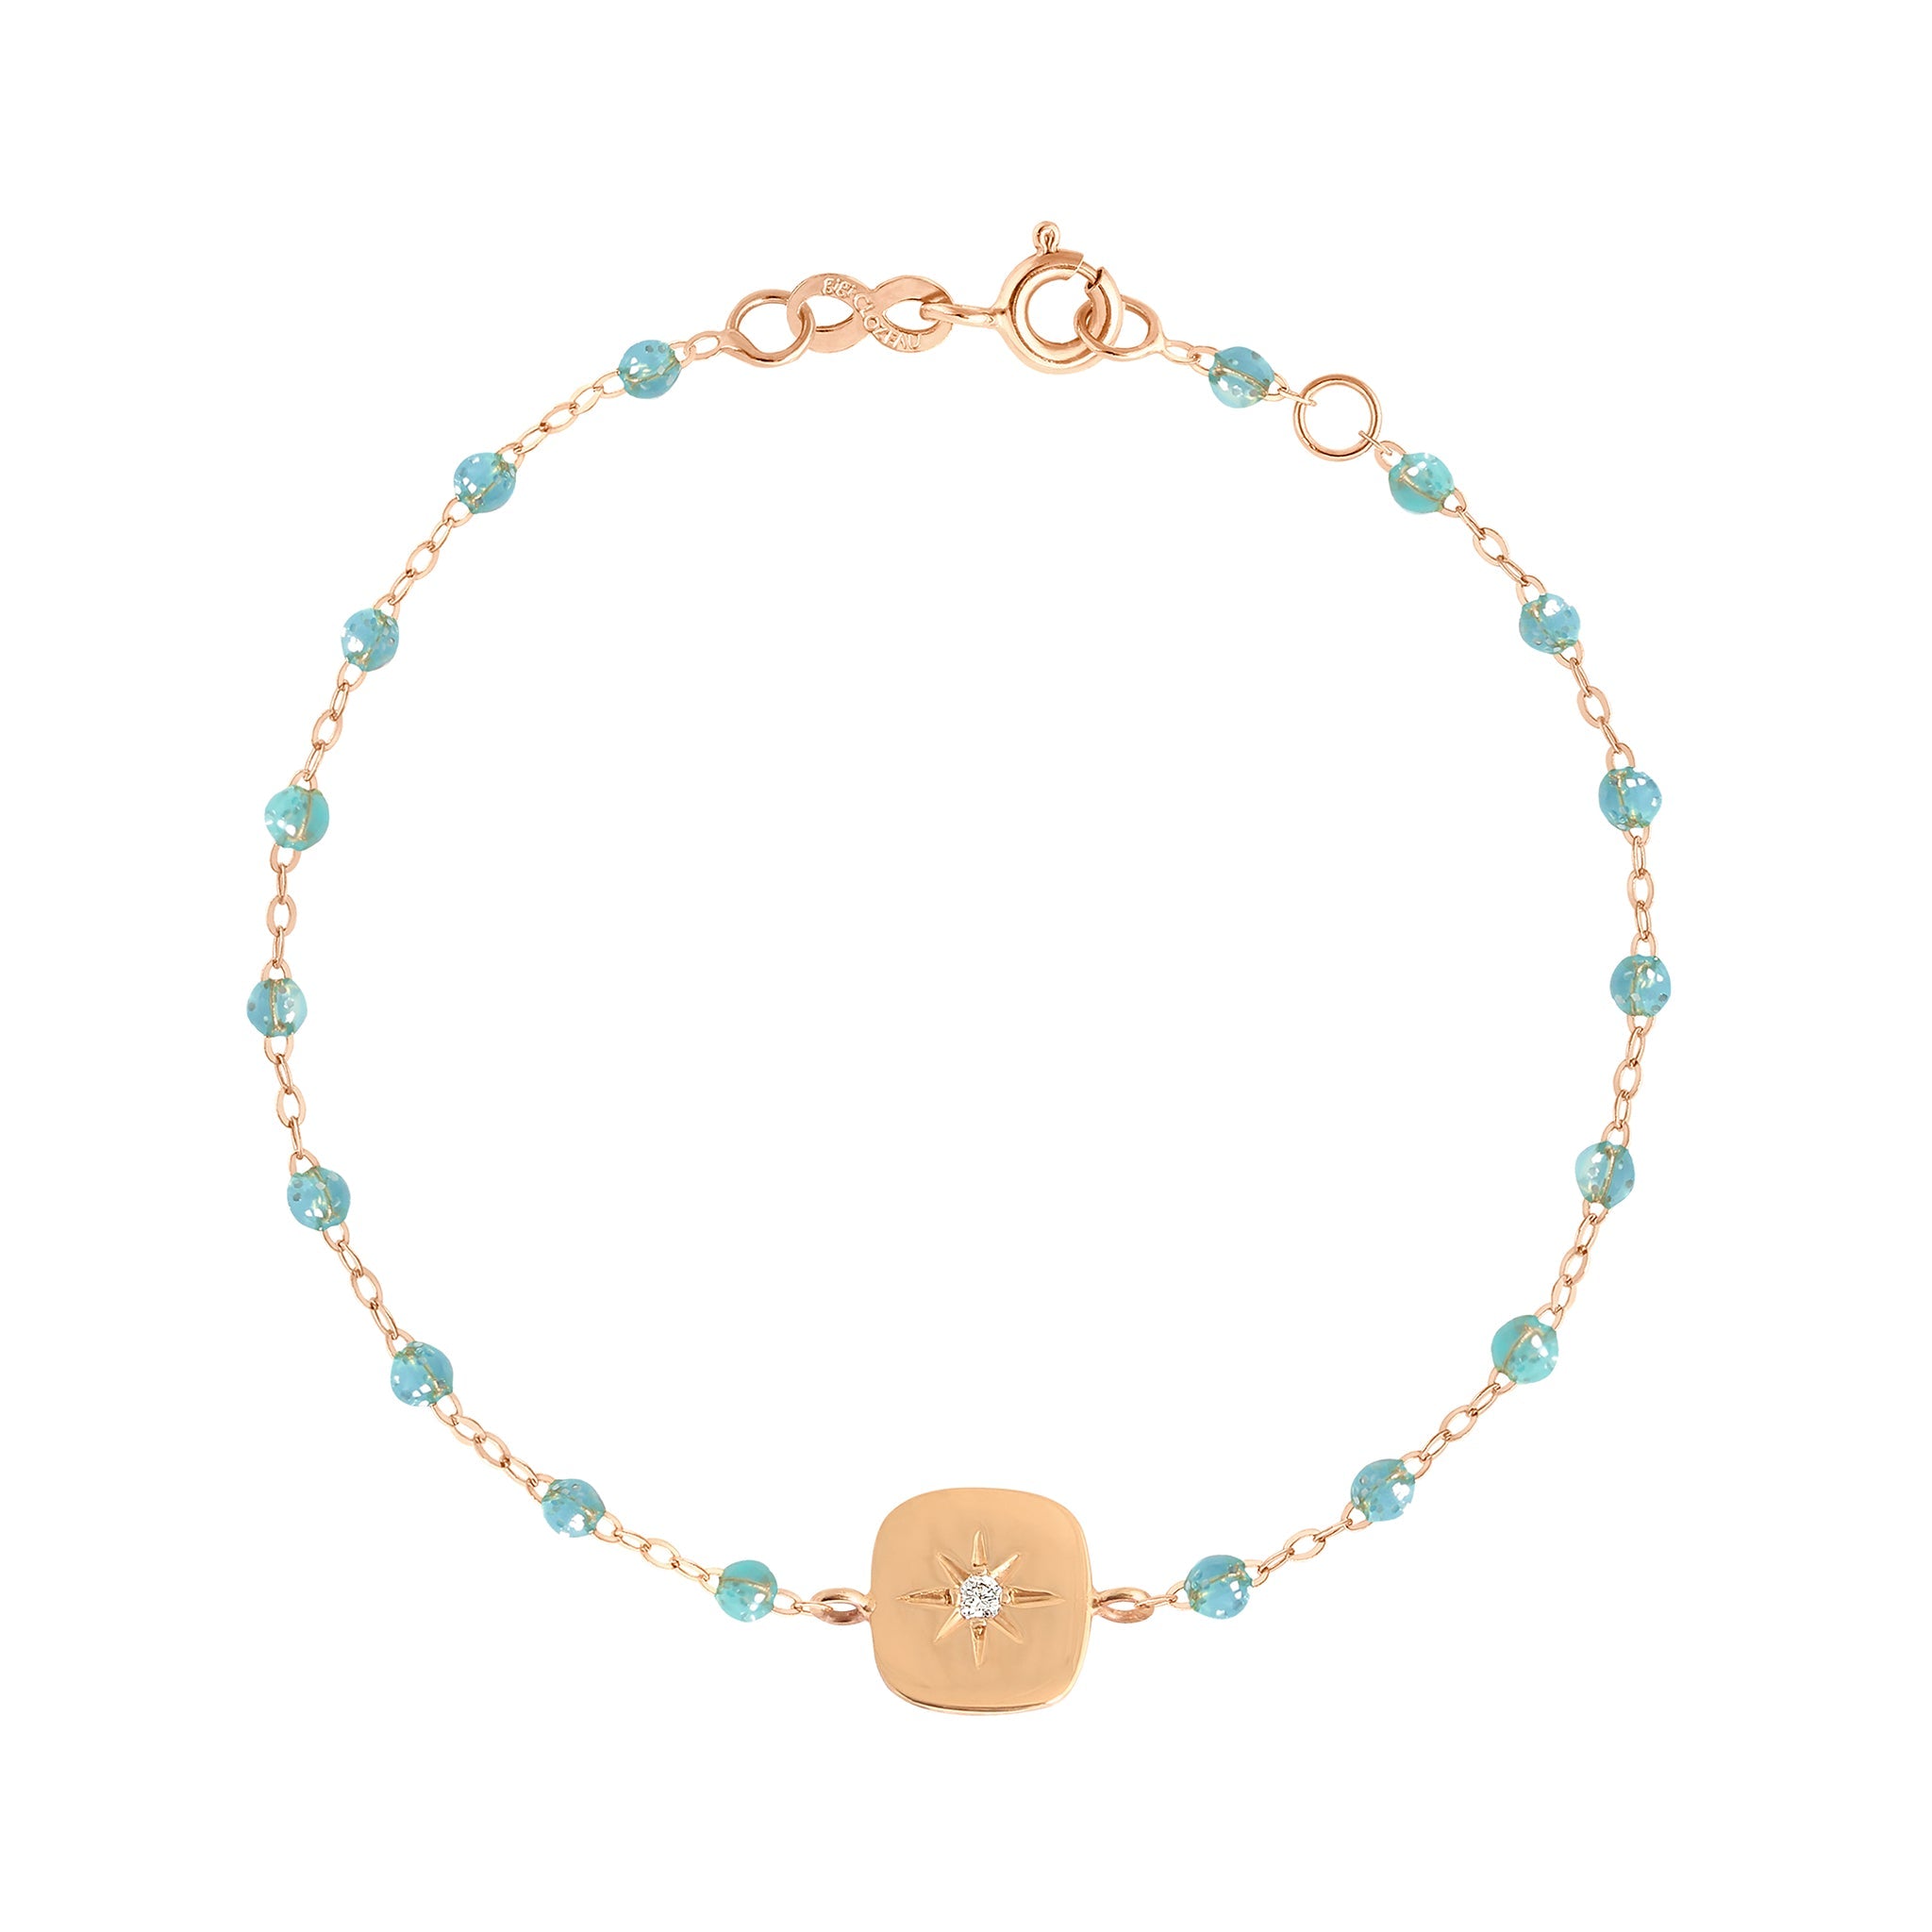 Bracelet aqua Miss Gigi diamant, or rose, 17 cm miss gigi Référence :  b3mg001r6217di -1